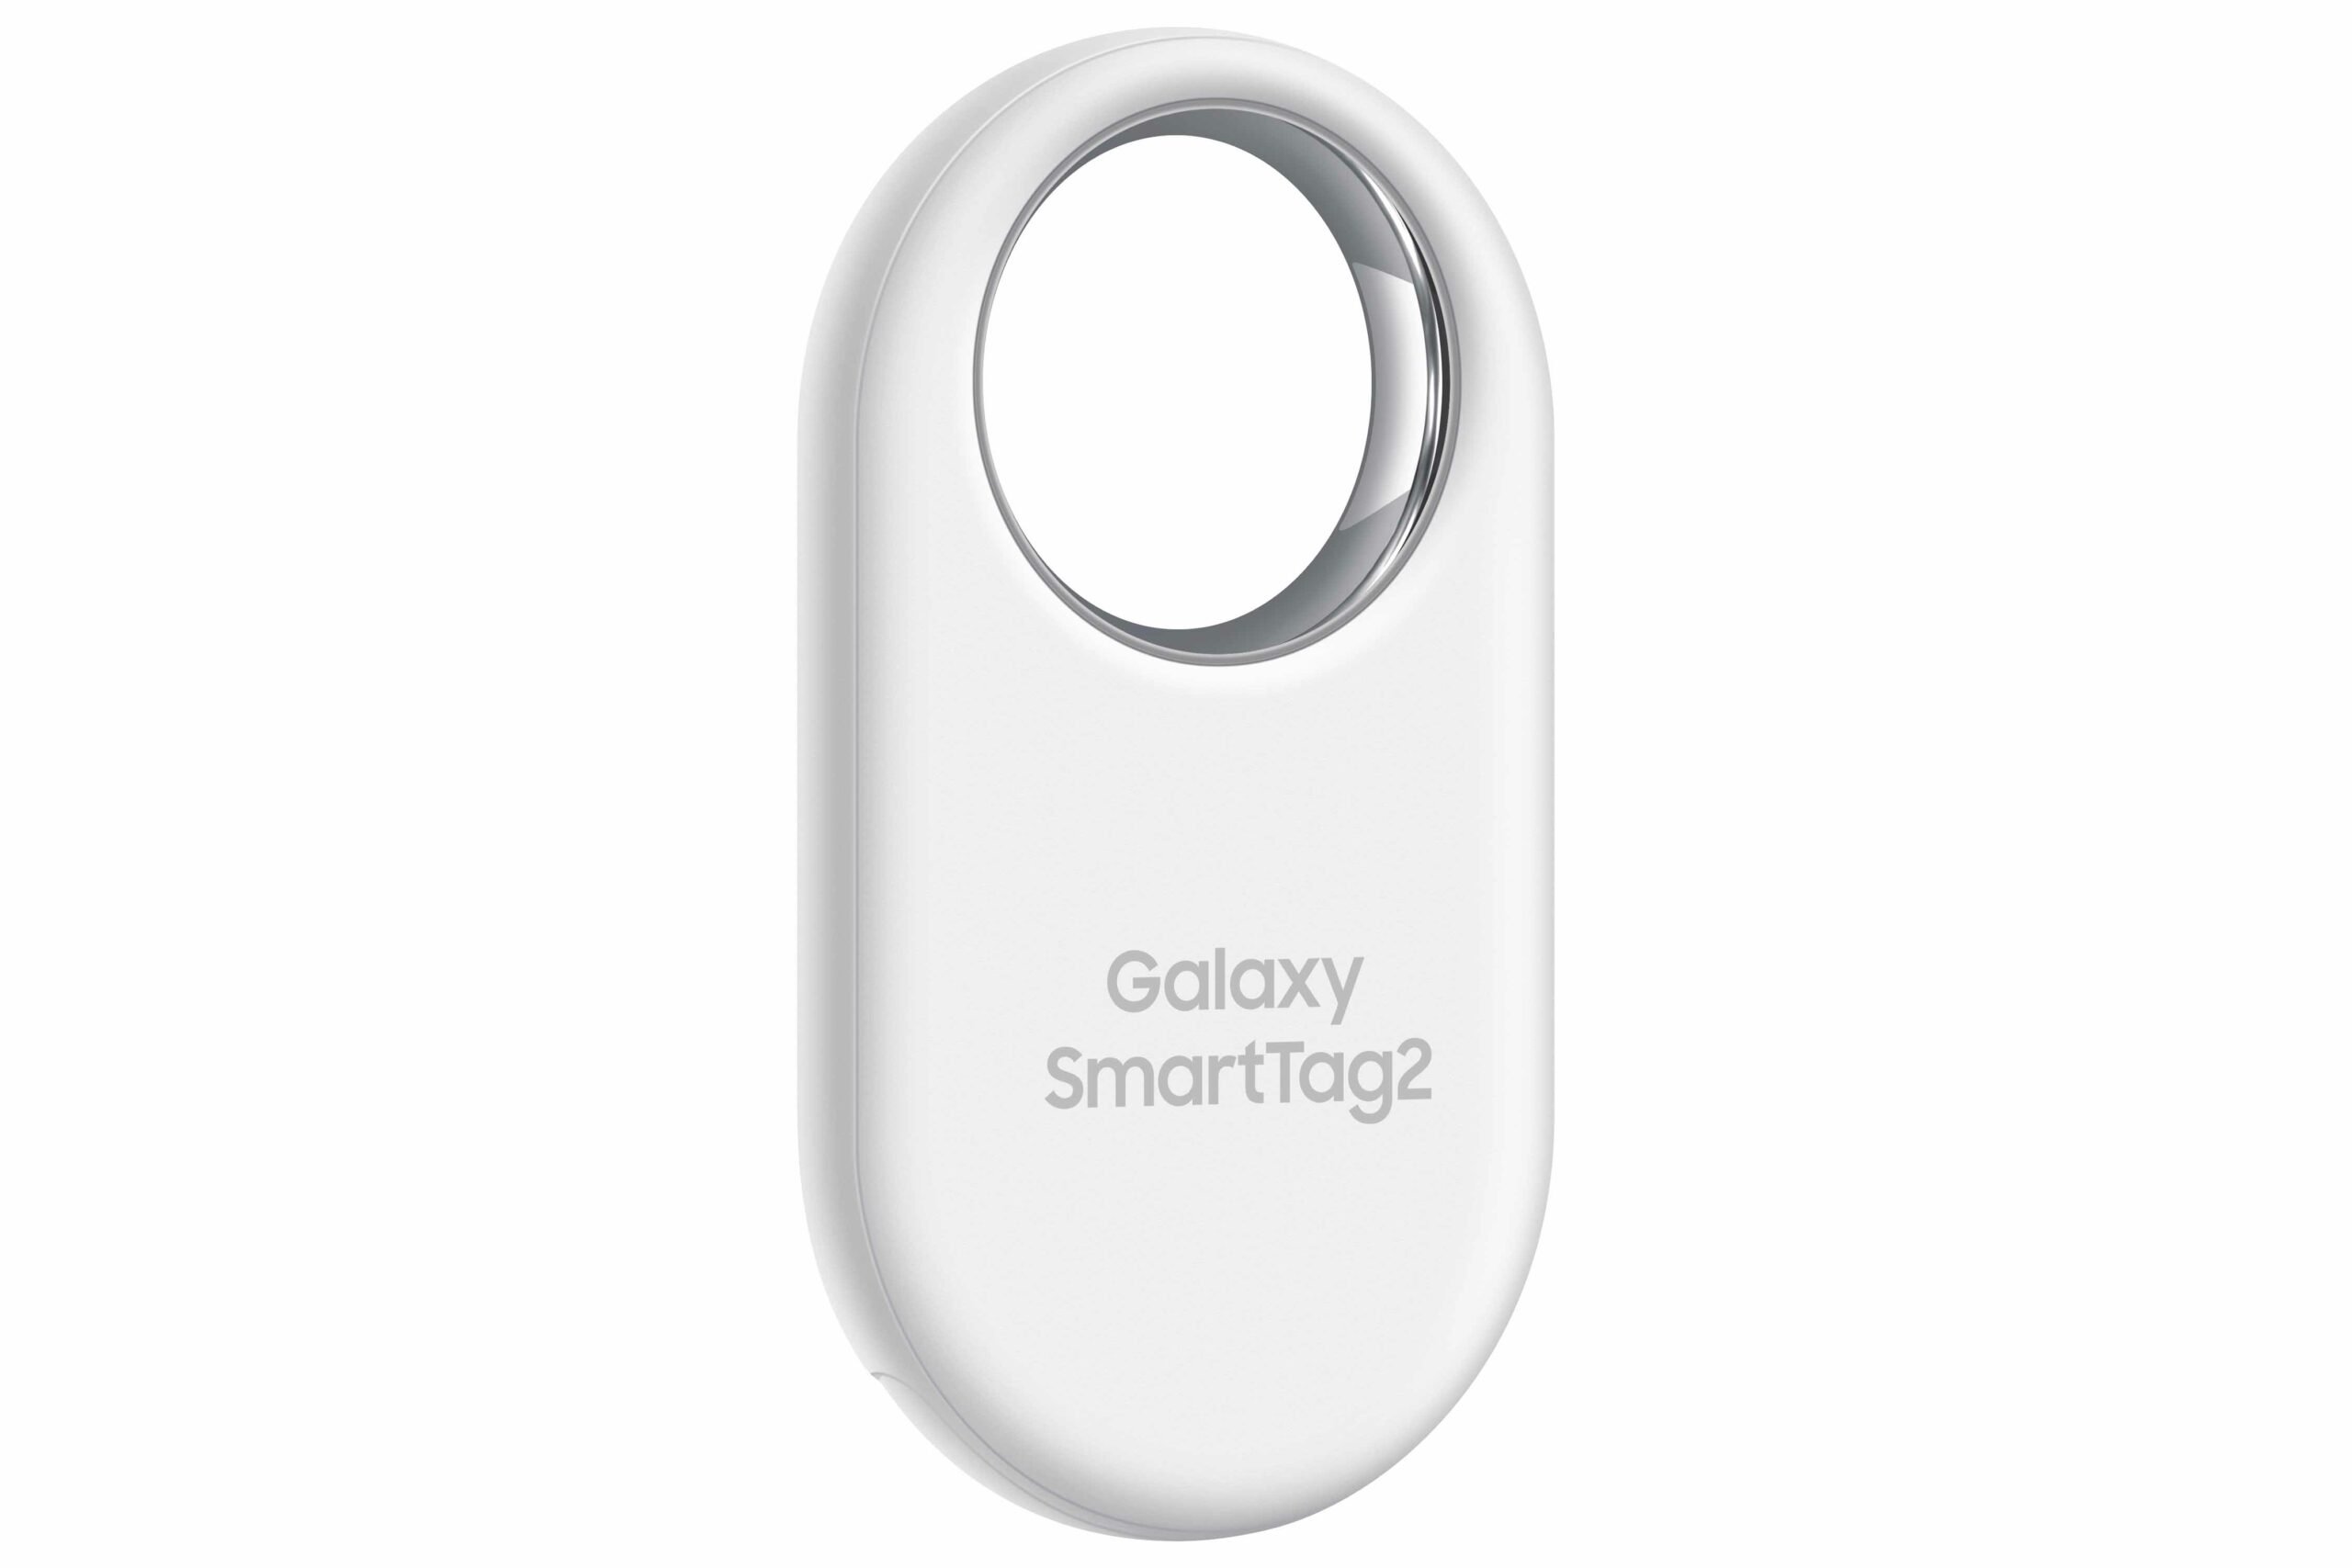 Case maker reconfirms Samsung Galaxy SmartTag 2 redesign - SamMobile